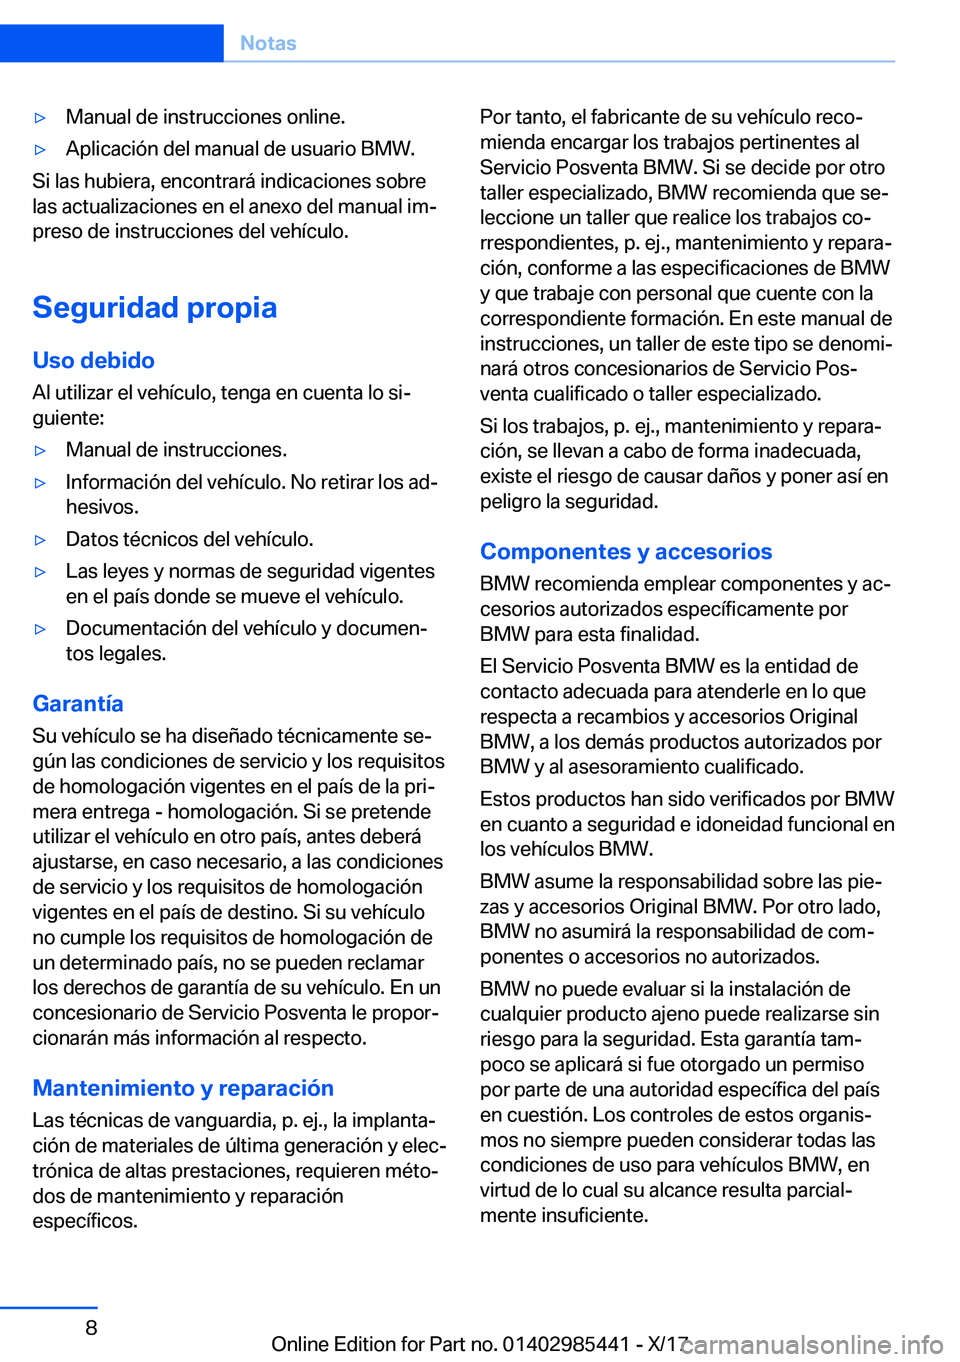 BMW X1 2018  Manuales de Empleo (in Spanish) y�M�a�n�u�a�l� �d�e� �i�n�s�t�r�u�c�c�i�o�n�e�s� �o�n�l�i�n�e�.y�A�p�l�i�c�a�c�i�